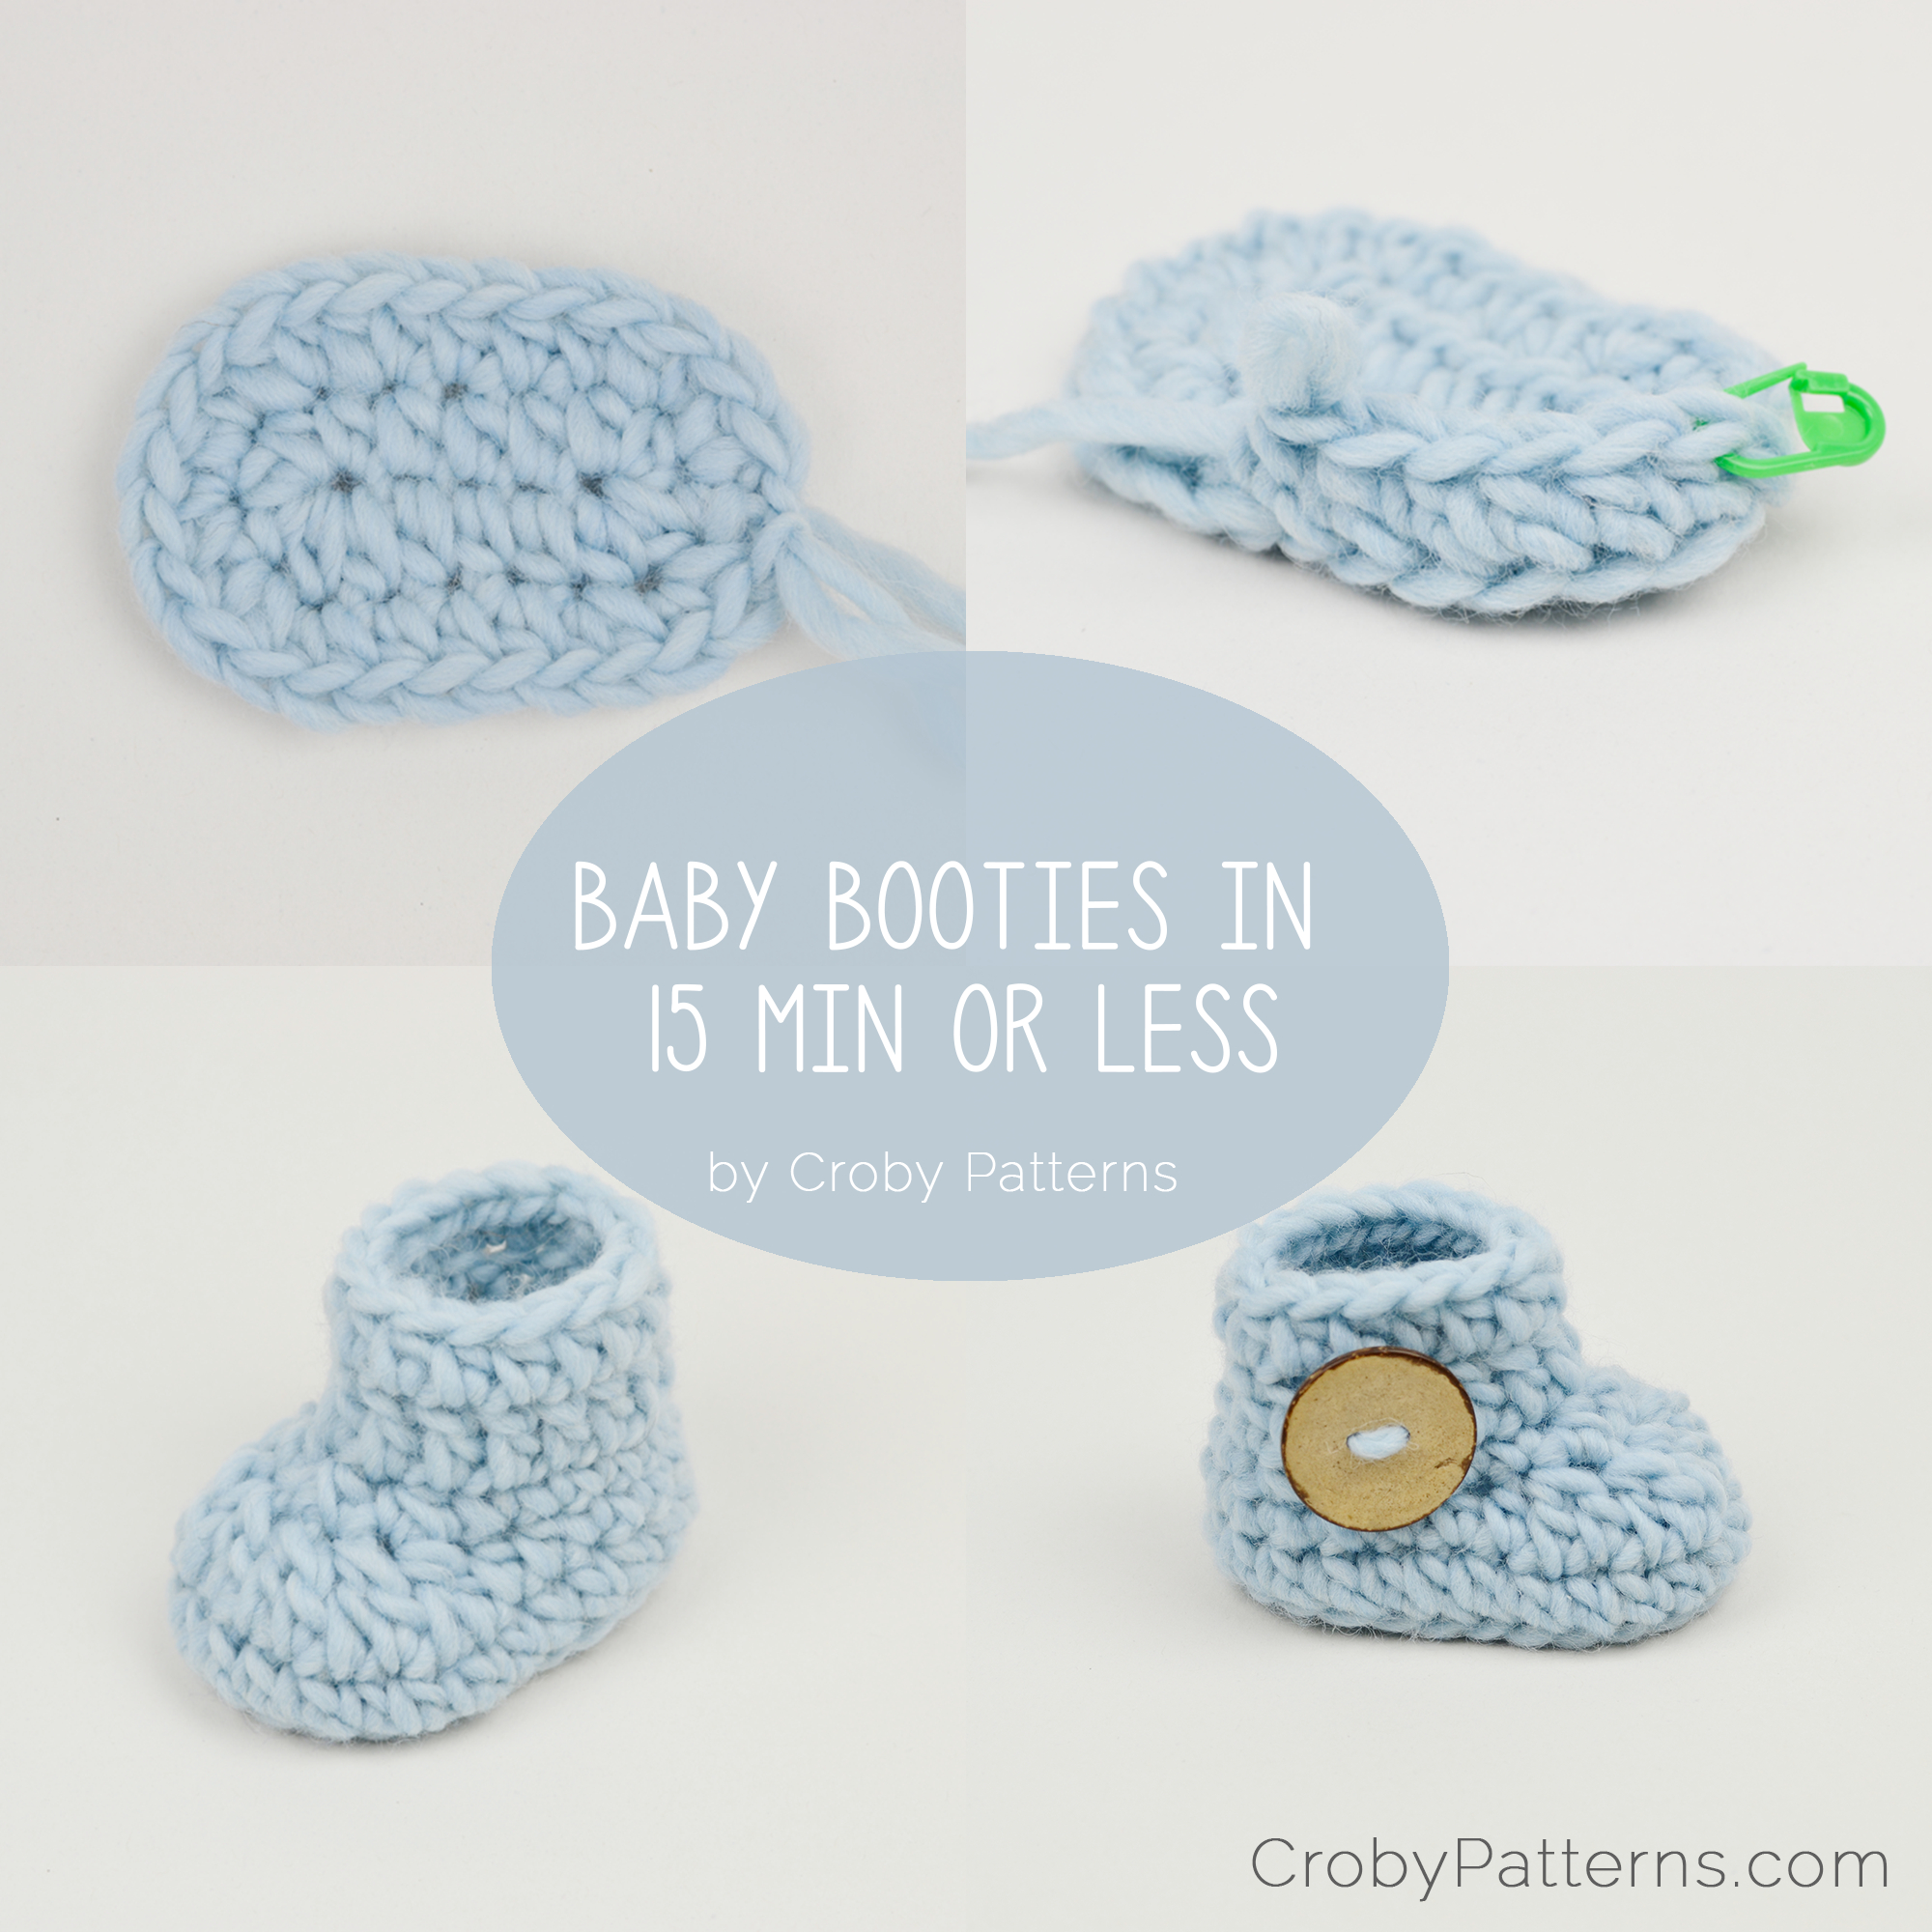 Crochet Baby Booties Pattern Crochet Ba Booties In 15 Minutes Or Less Cro Patterns